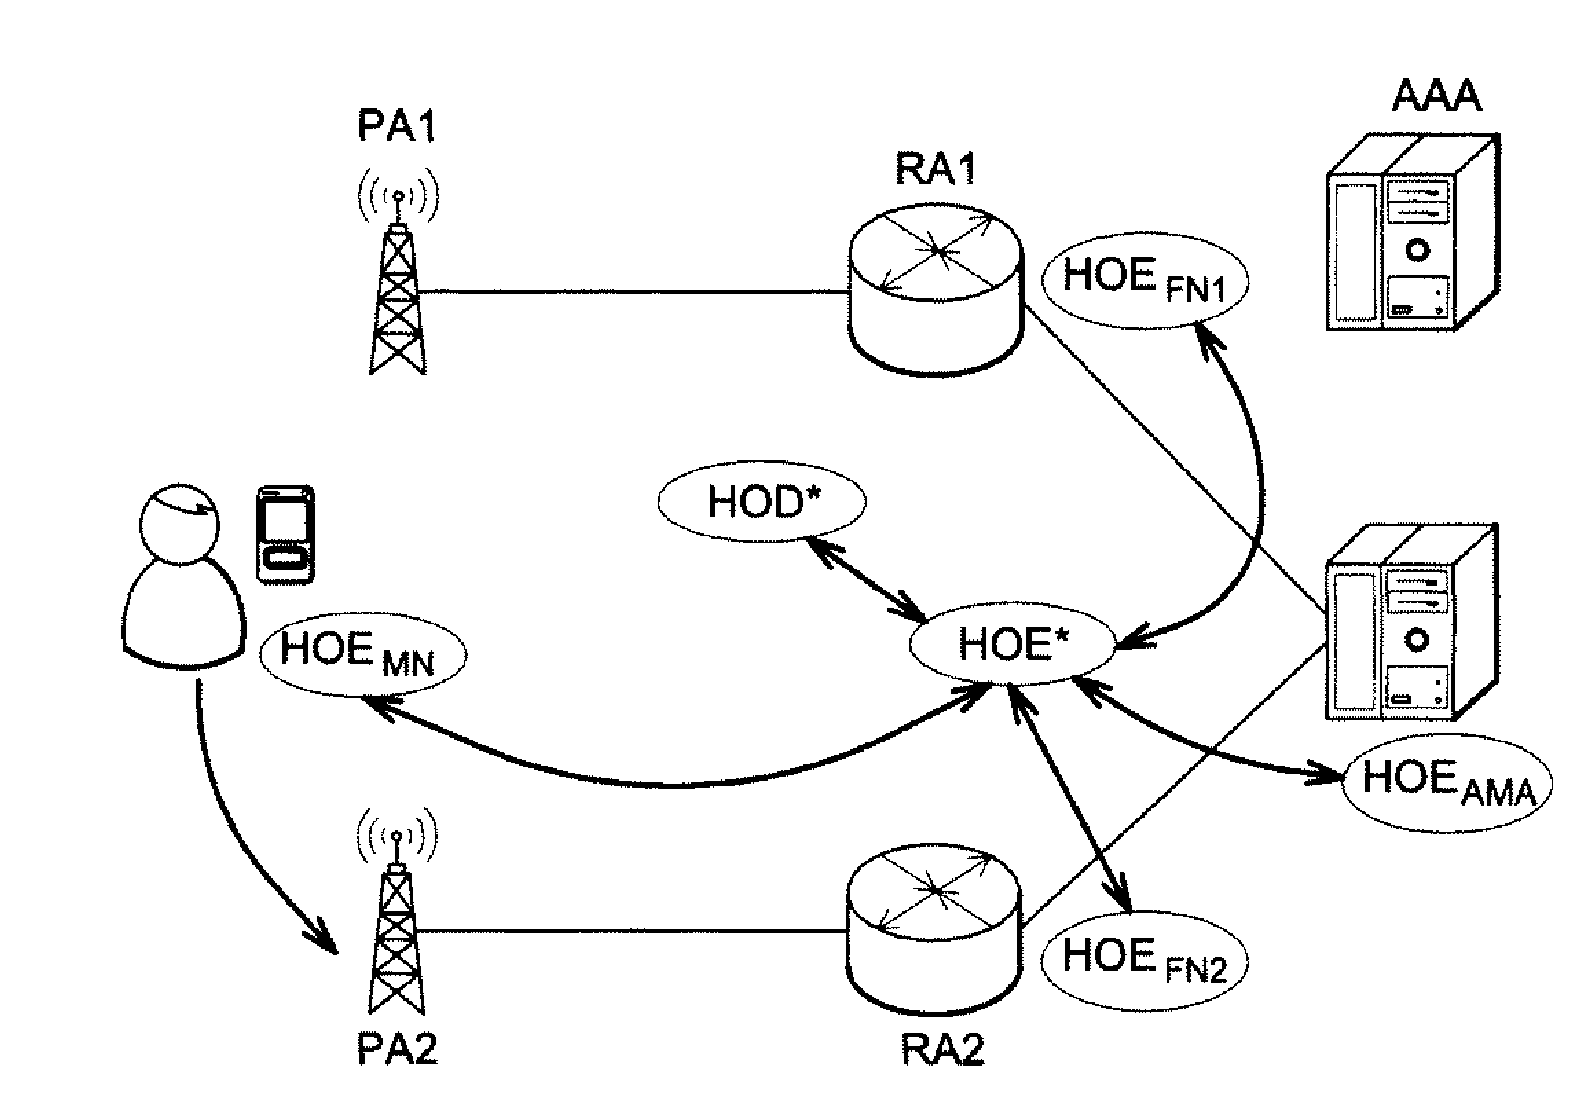 Method for transferring a flow between heterogeneous access points